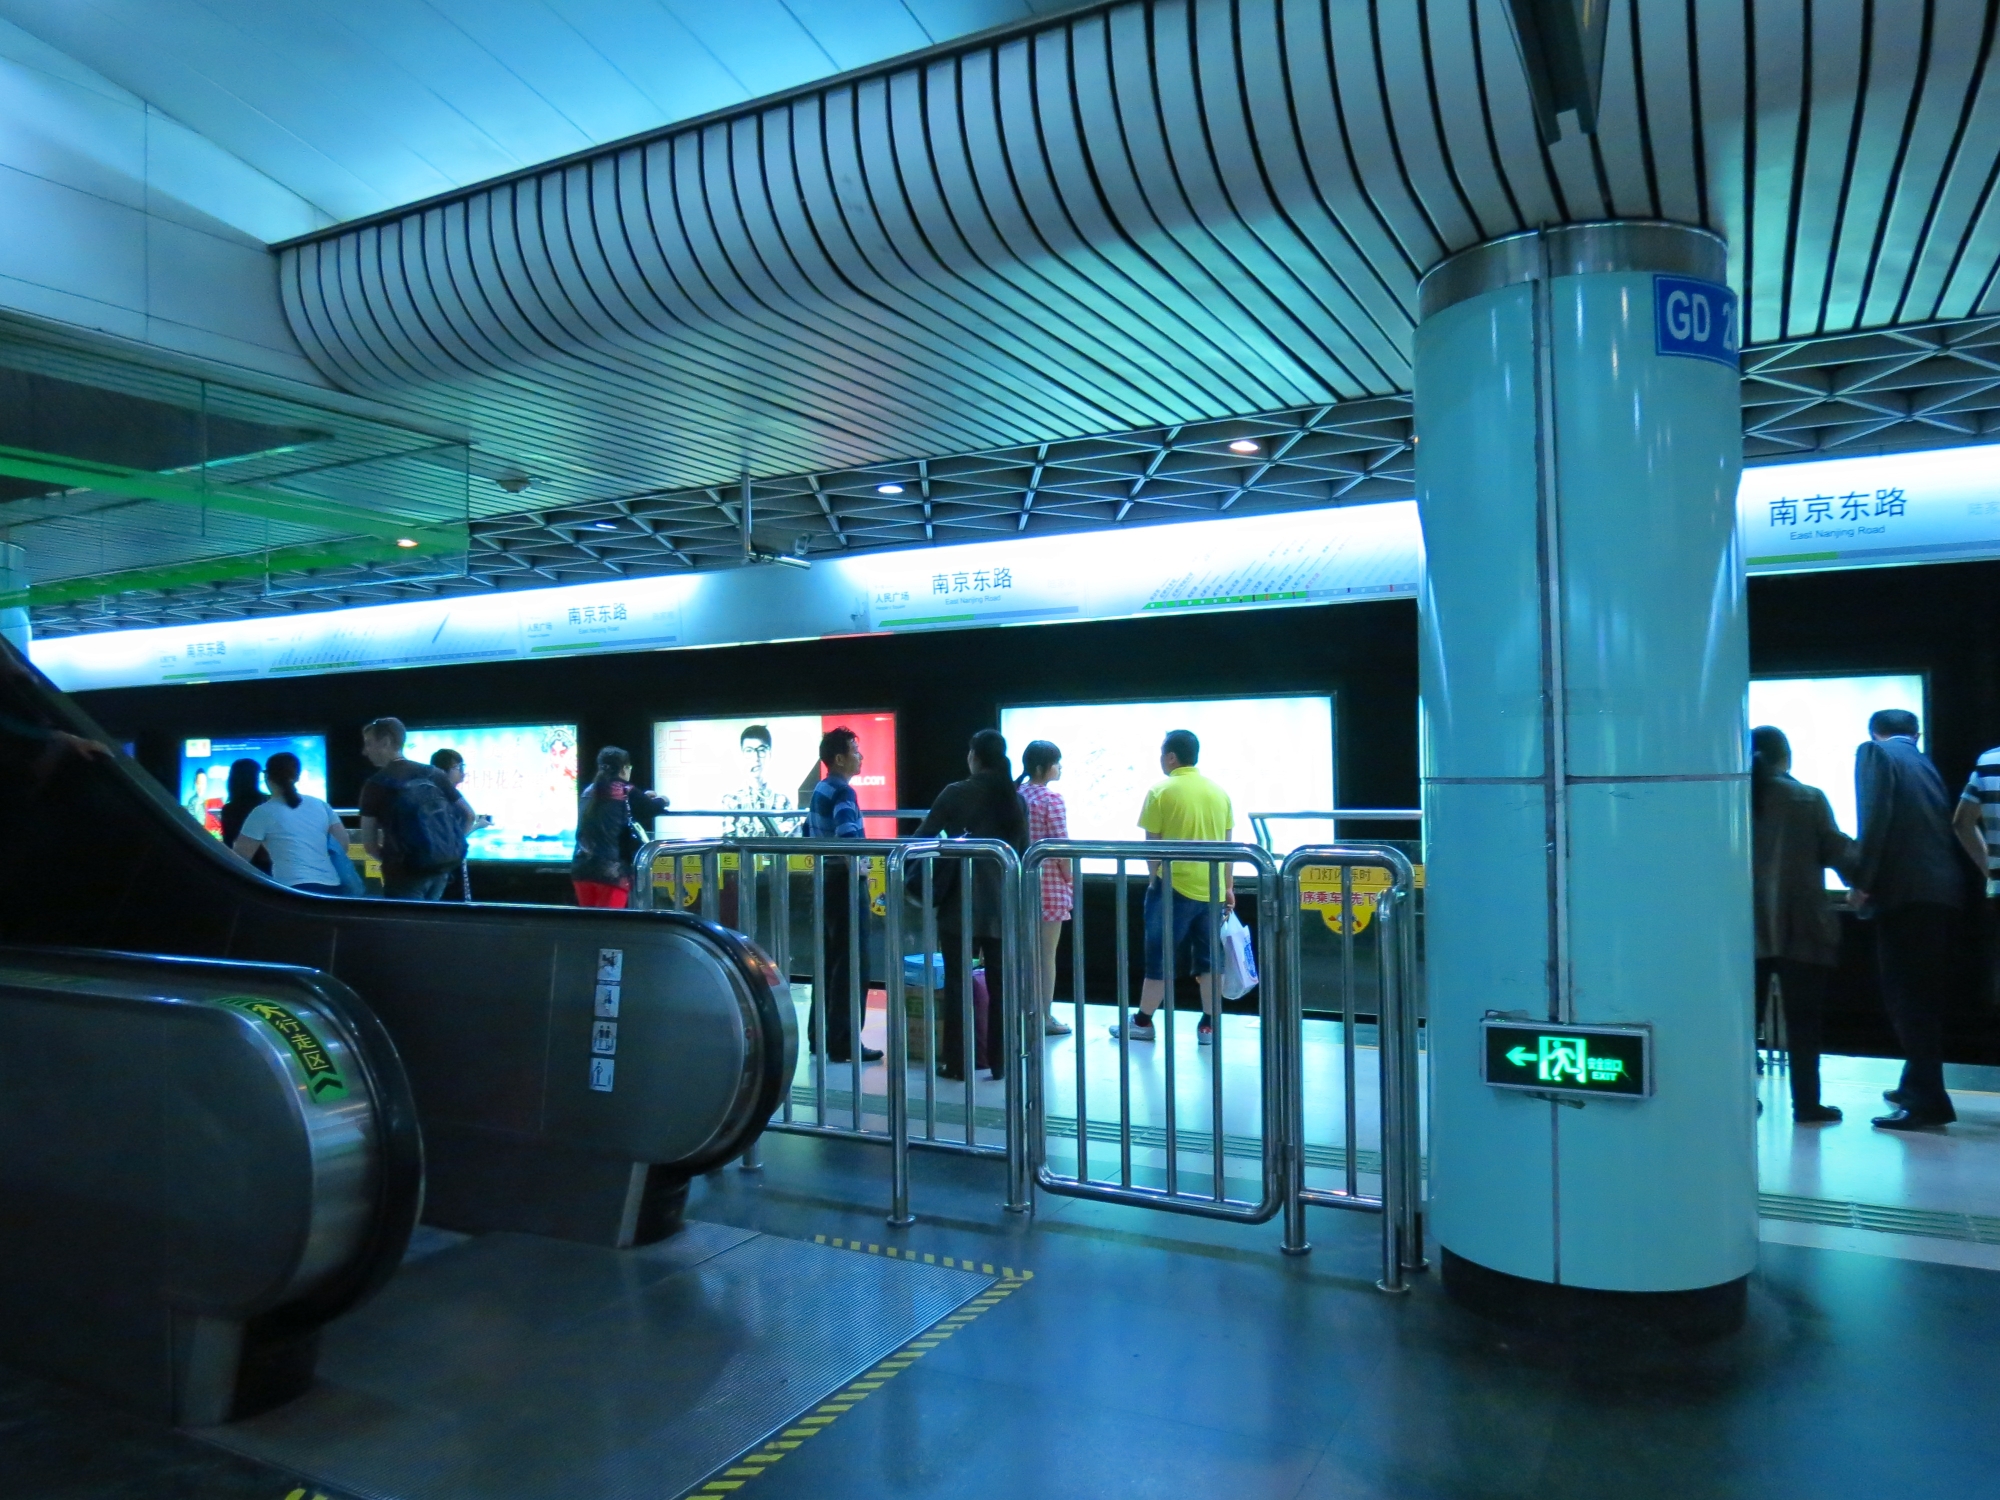 Пересадка в аэропорту шанхая. Аэропорт Шанхай Пудун. Метро Шанхая. Аэропорт Шанхая транзитная зона. Поезд аэропорт - Шанхай Пудун.